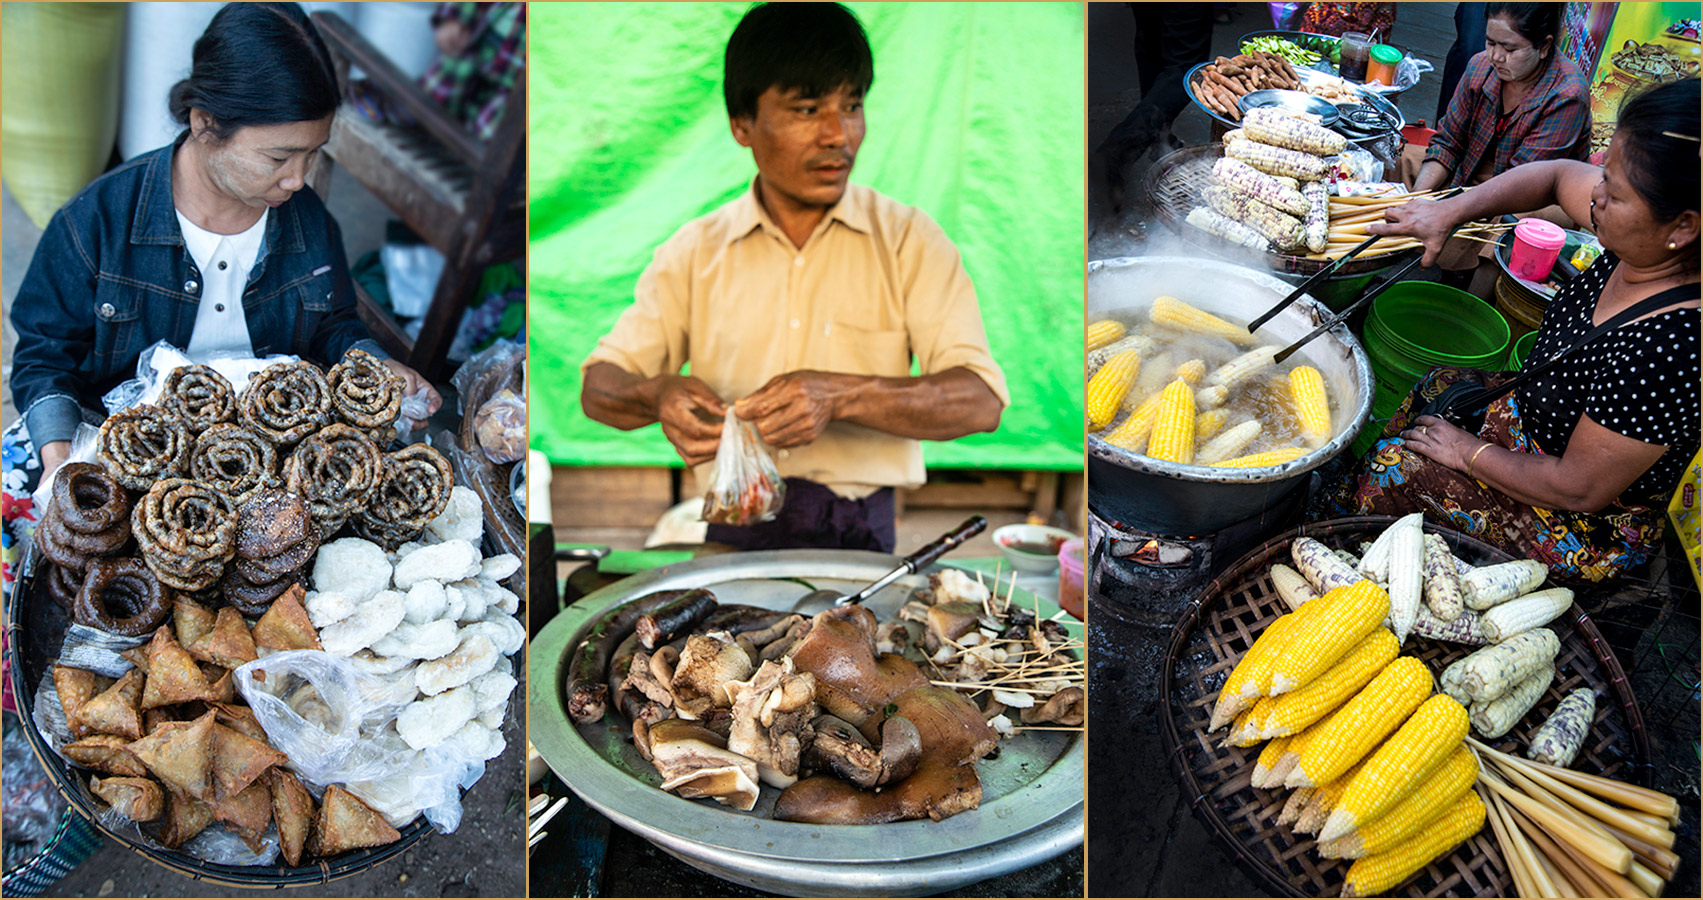 Myanmar: Street food vendors